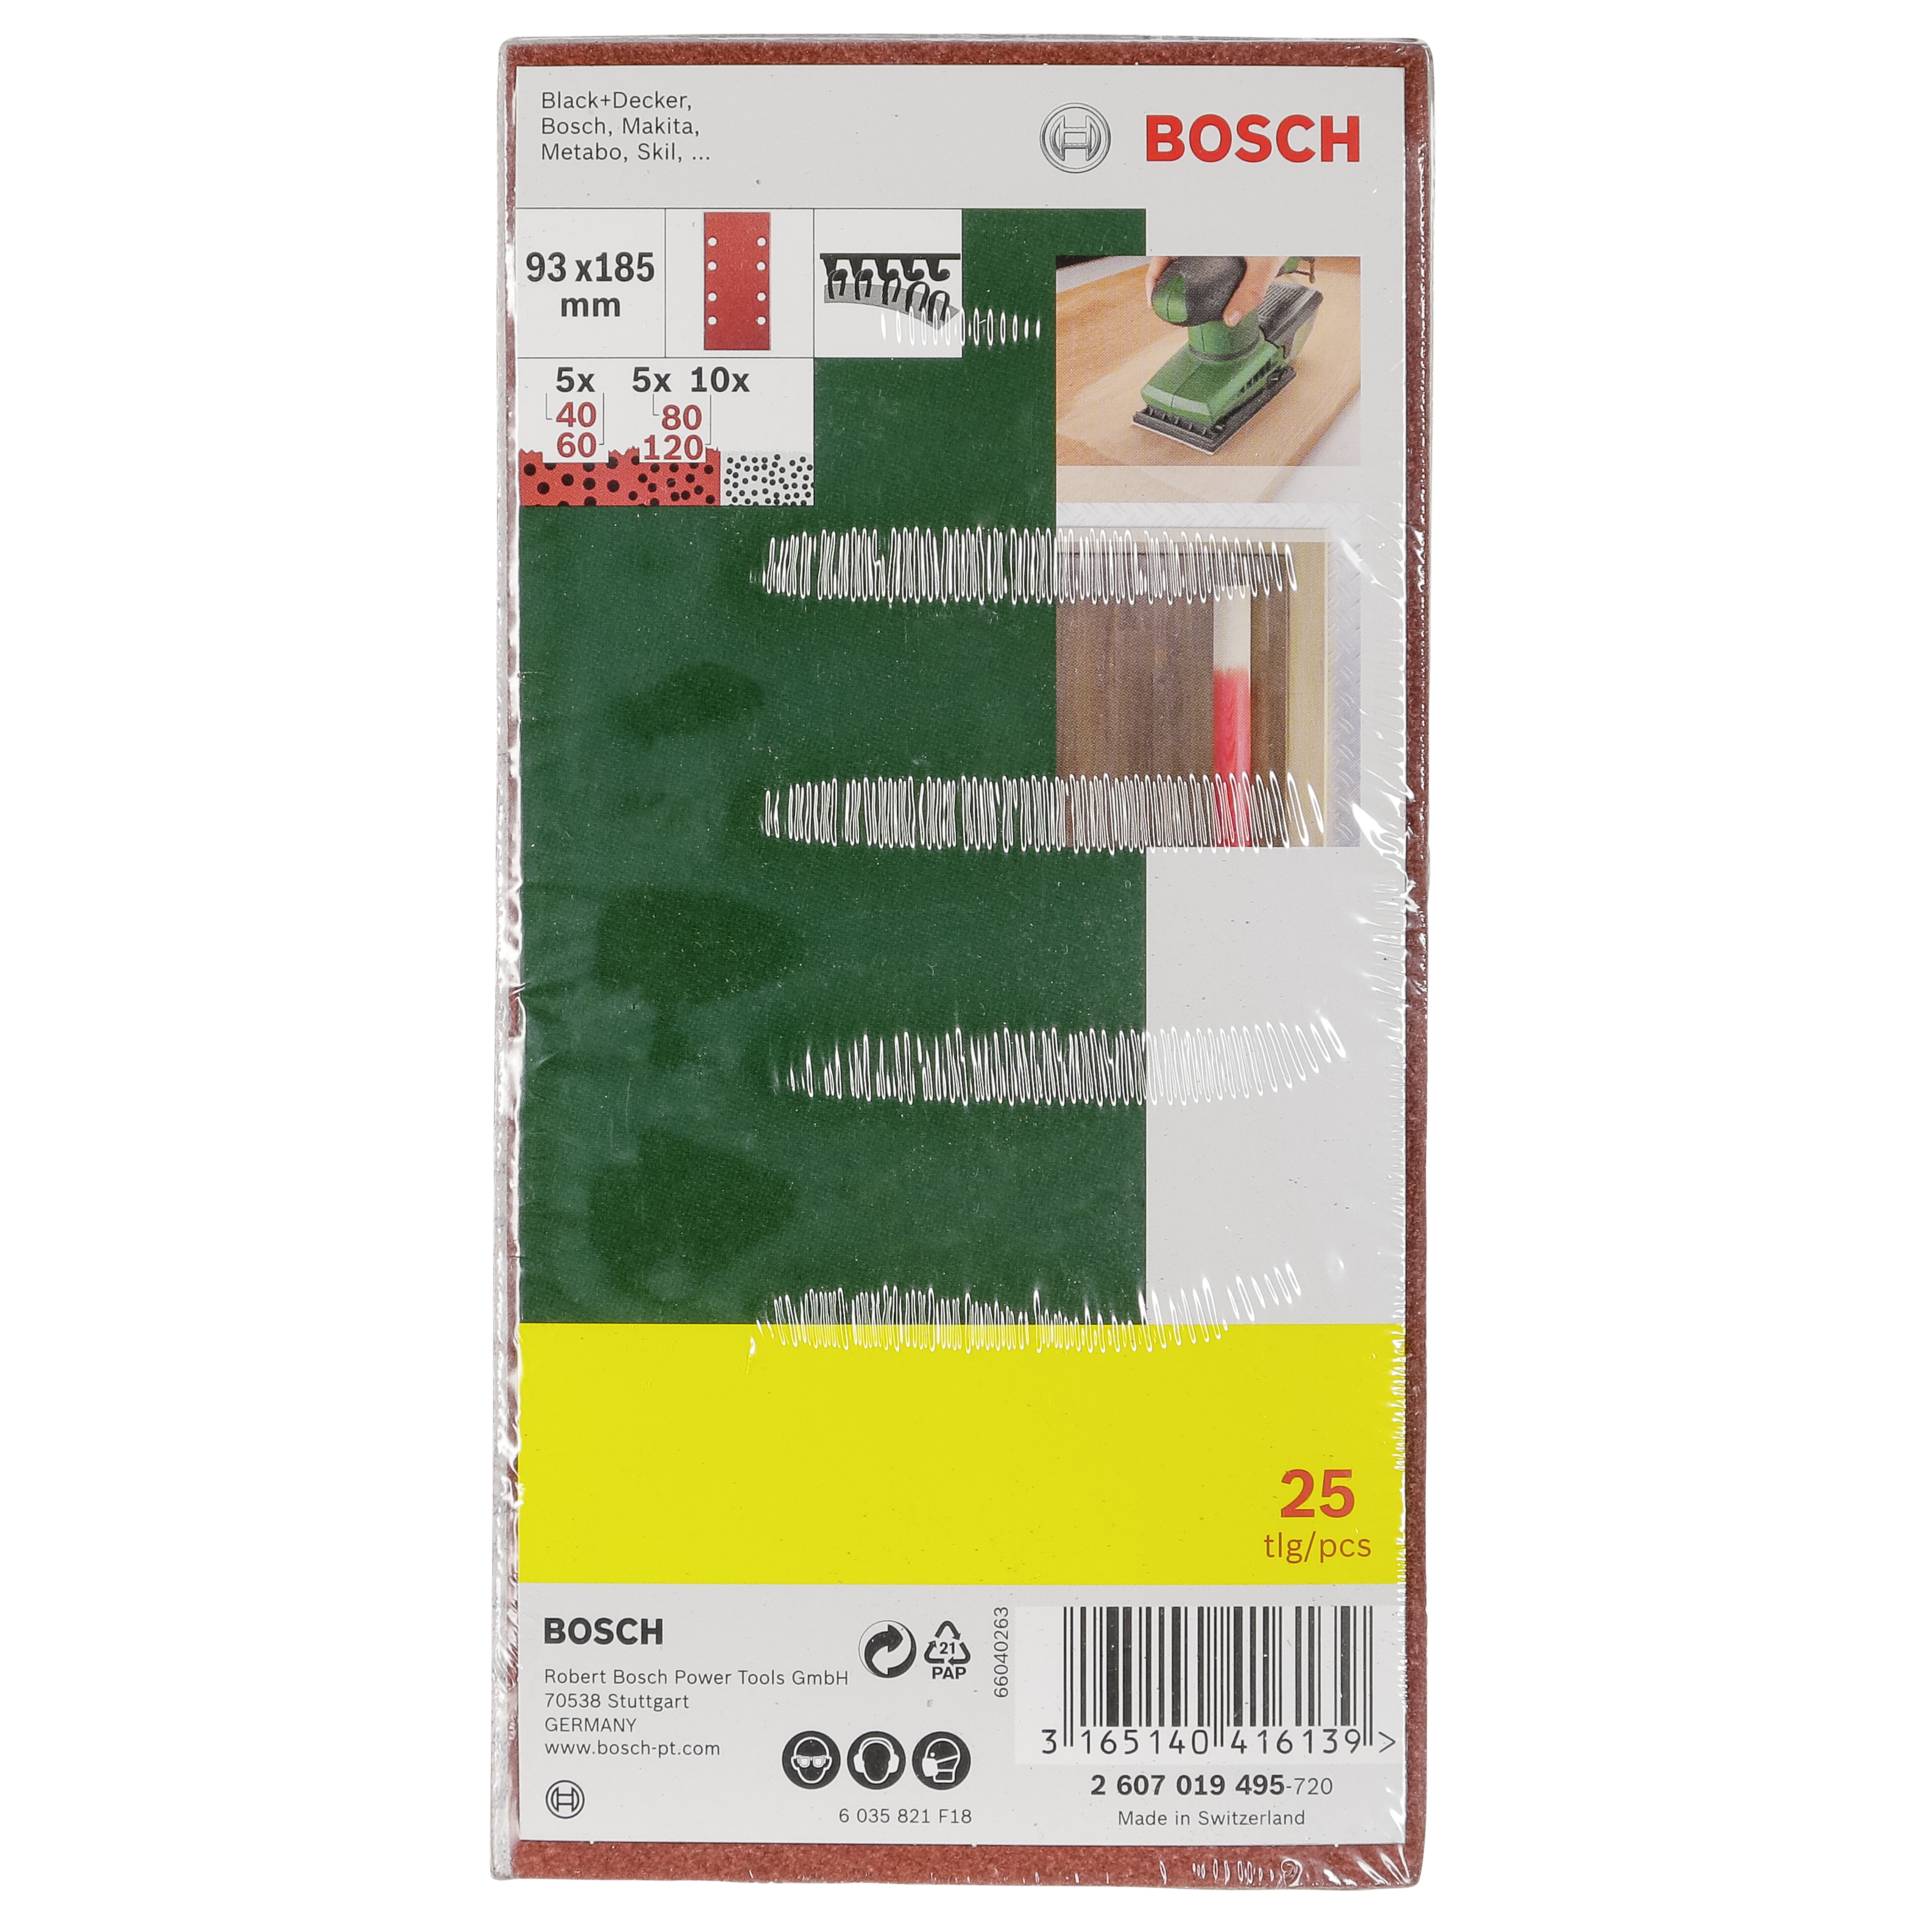 Bosch 25 Schleifblätter 93x185 8 Loch Körnung 40-120